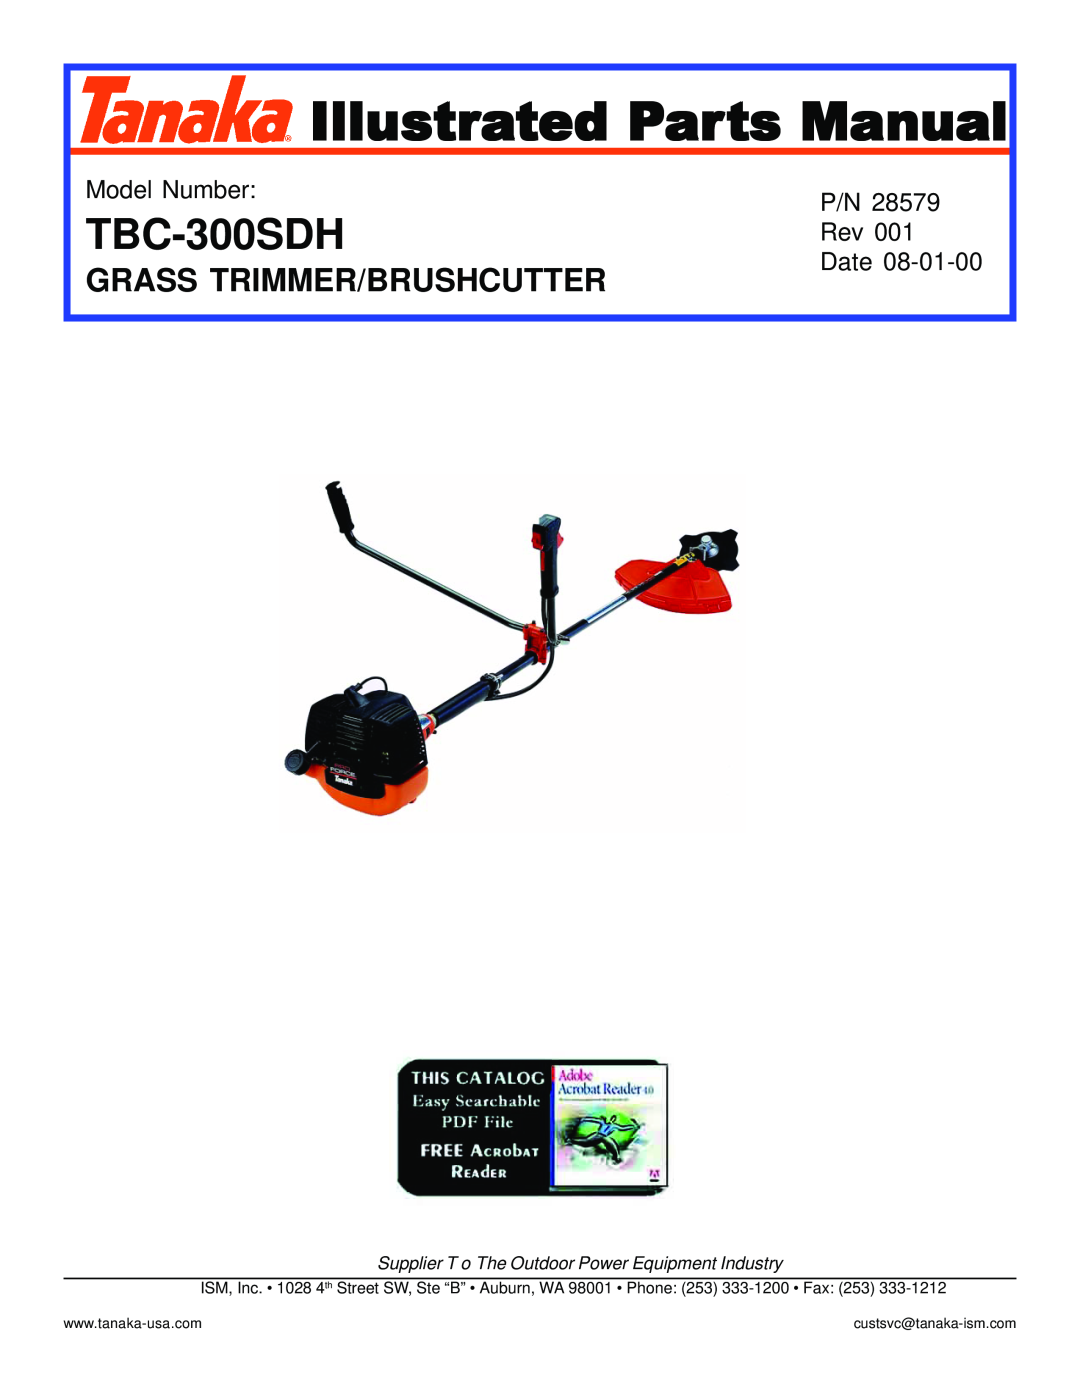 Tanaka TBC-300SDH manual Illustrated Parts Manual, Grass Trimmer/Brushcutter, custsvc@tanaka-ism.com 